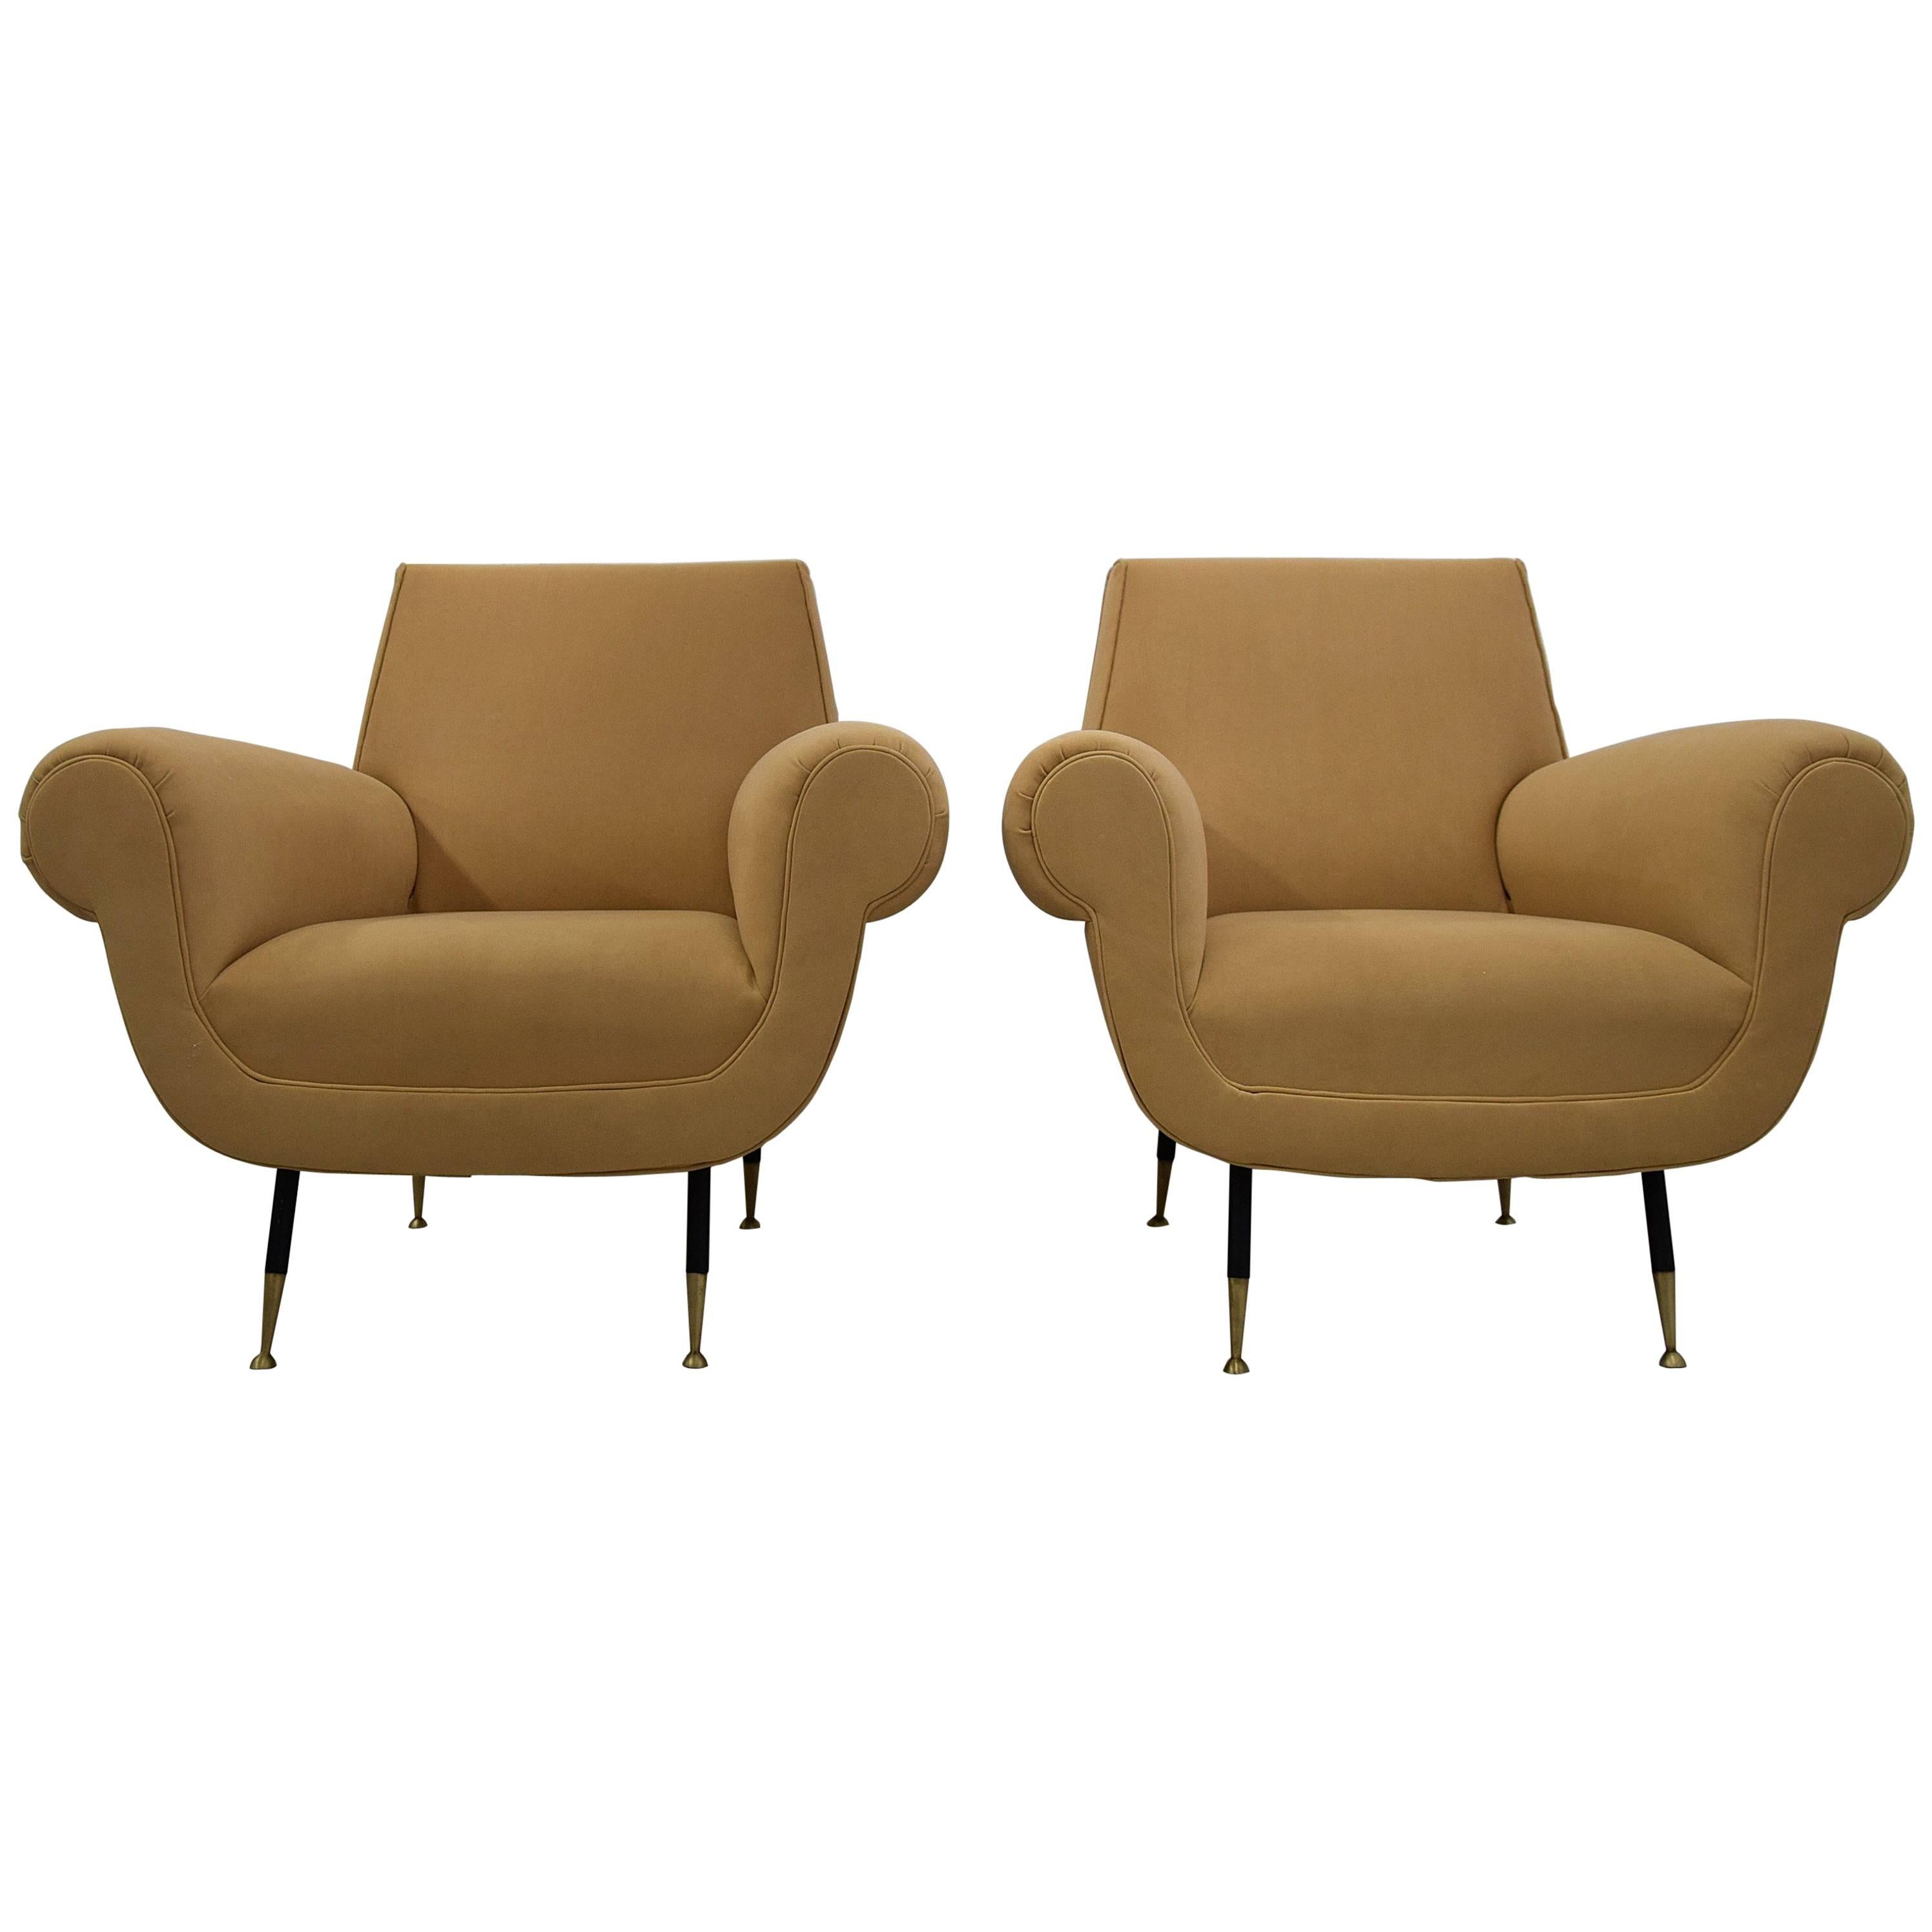 Gigi Radice mid century modern lounge chairs